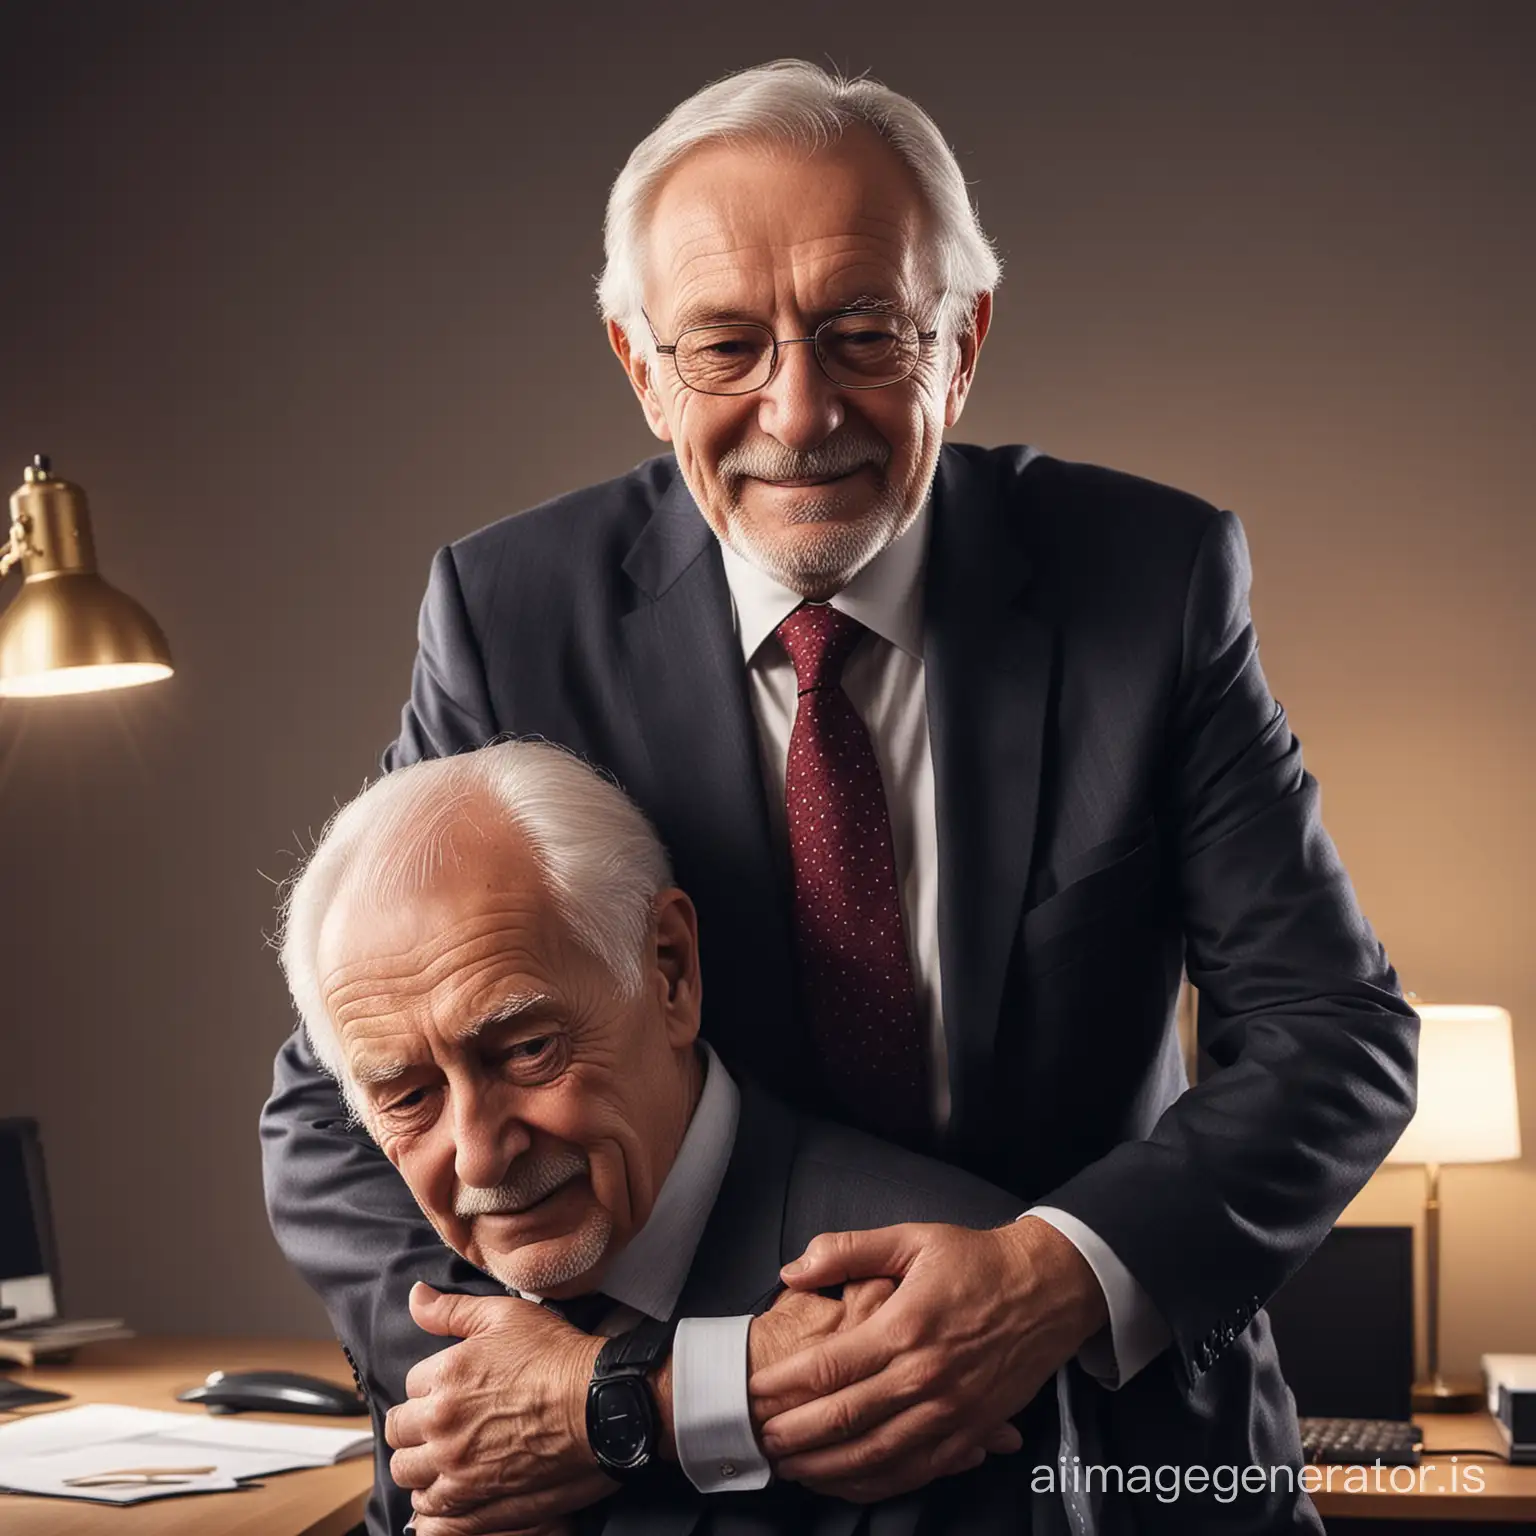 An elderly business cuddling another elderly man from behind, full body shot, full body shot, office background, dramatic lighting